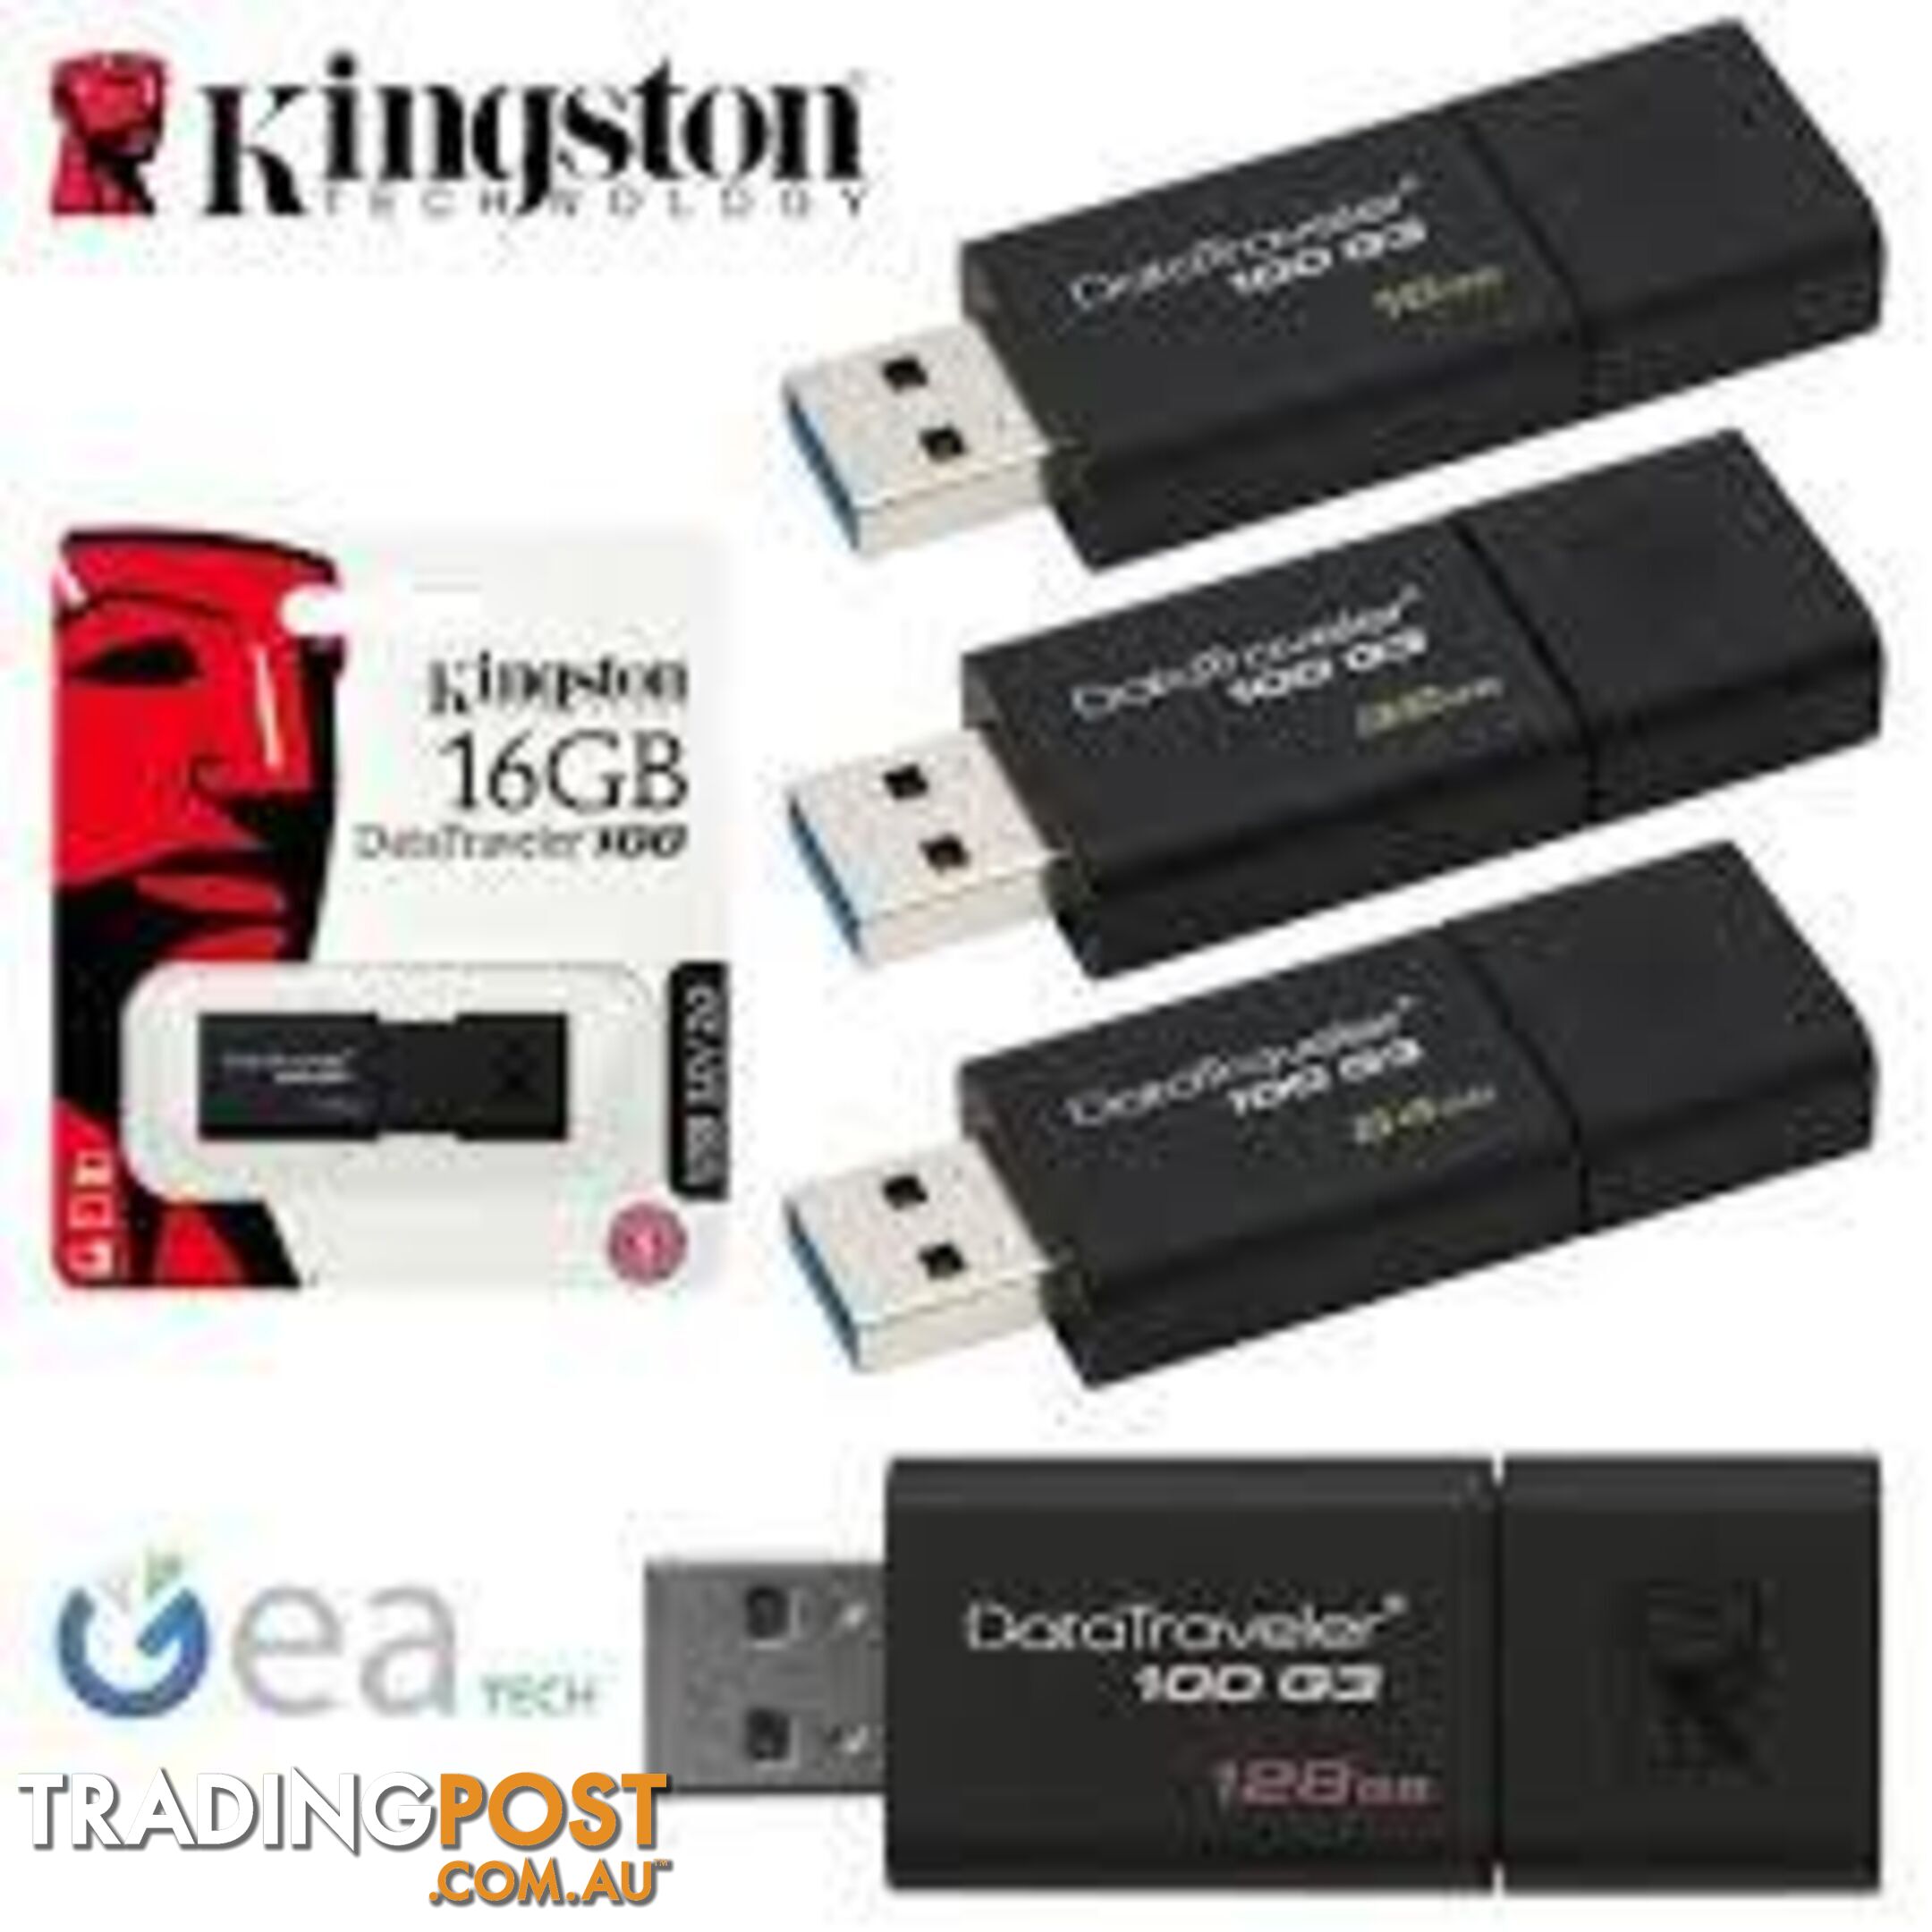 Kingston USB Drive - DT100G3-64G - External Storage Device